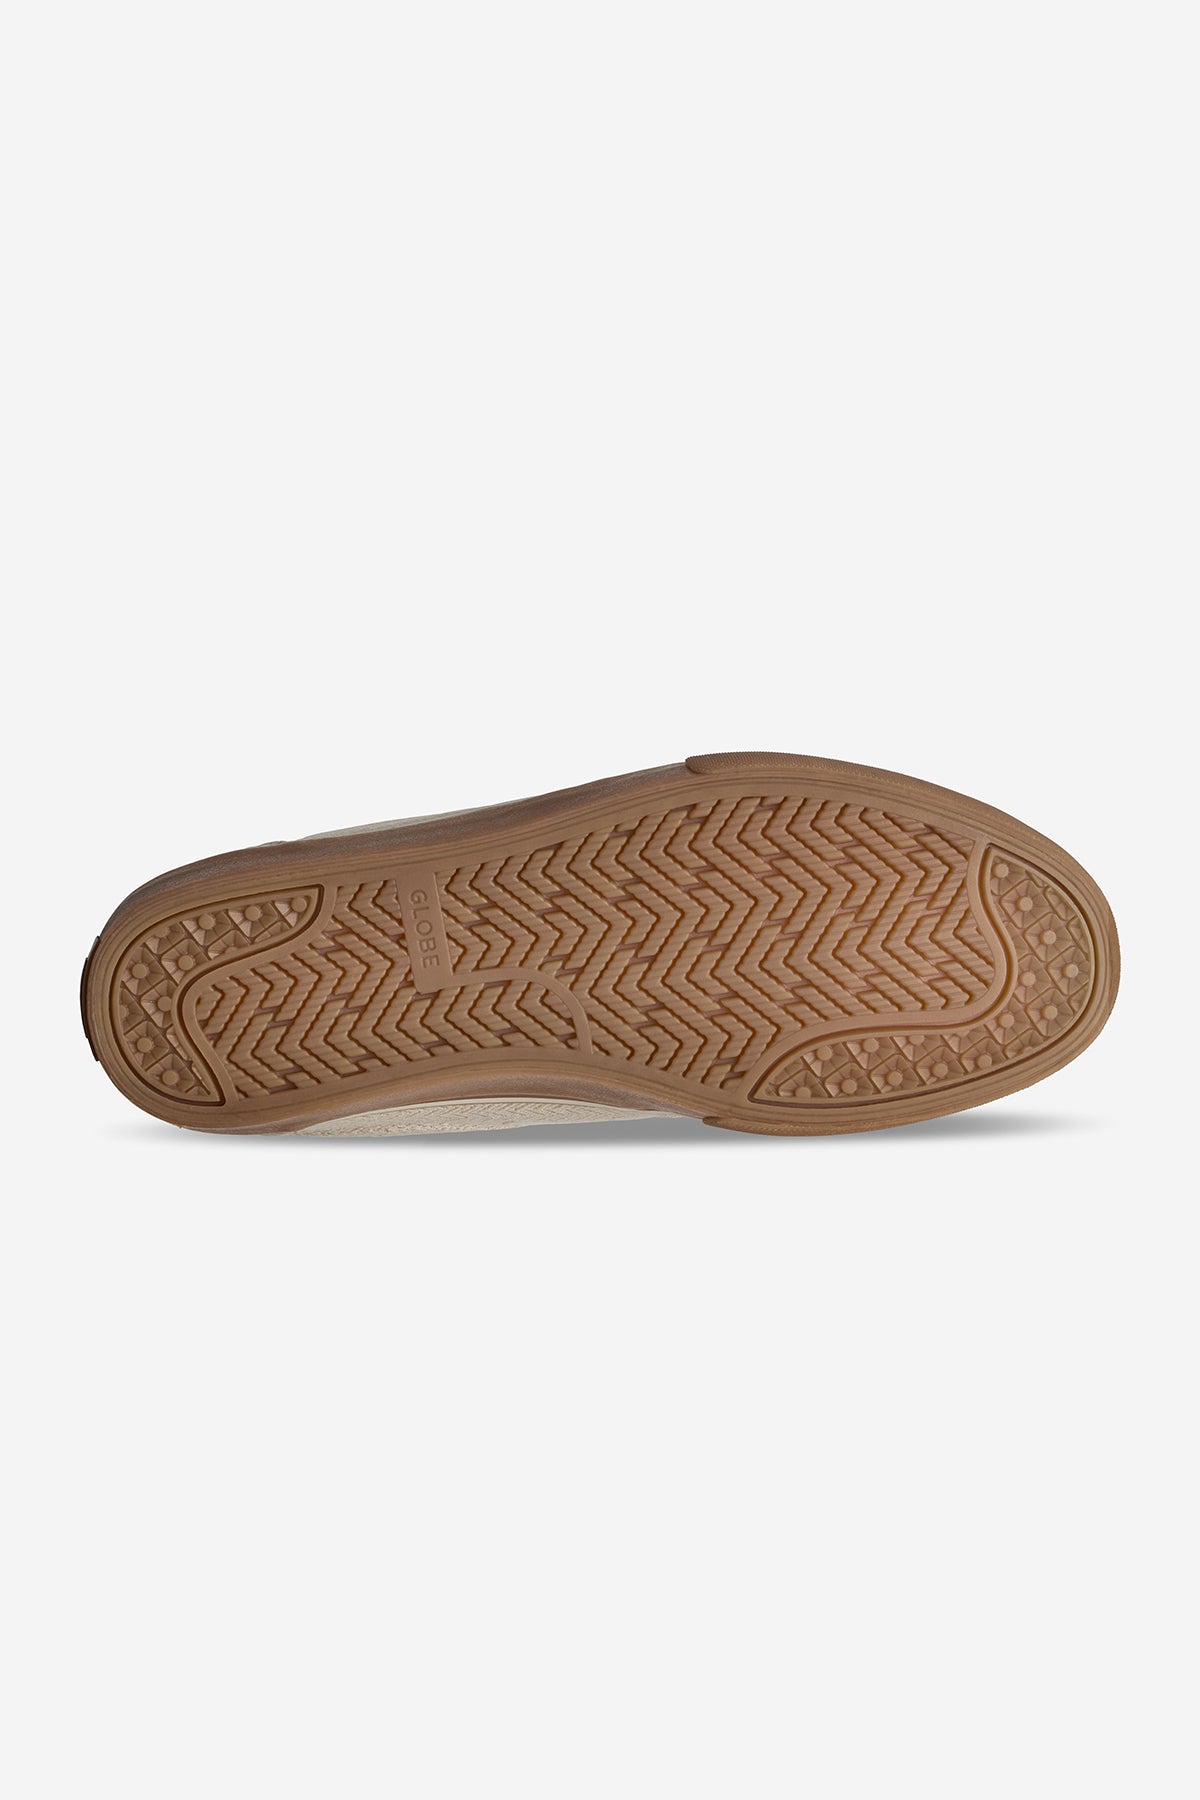 mahalo herringbone hemp skateboard shoes